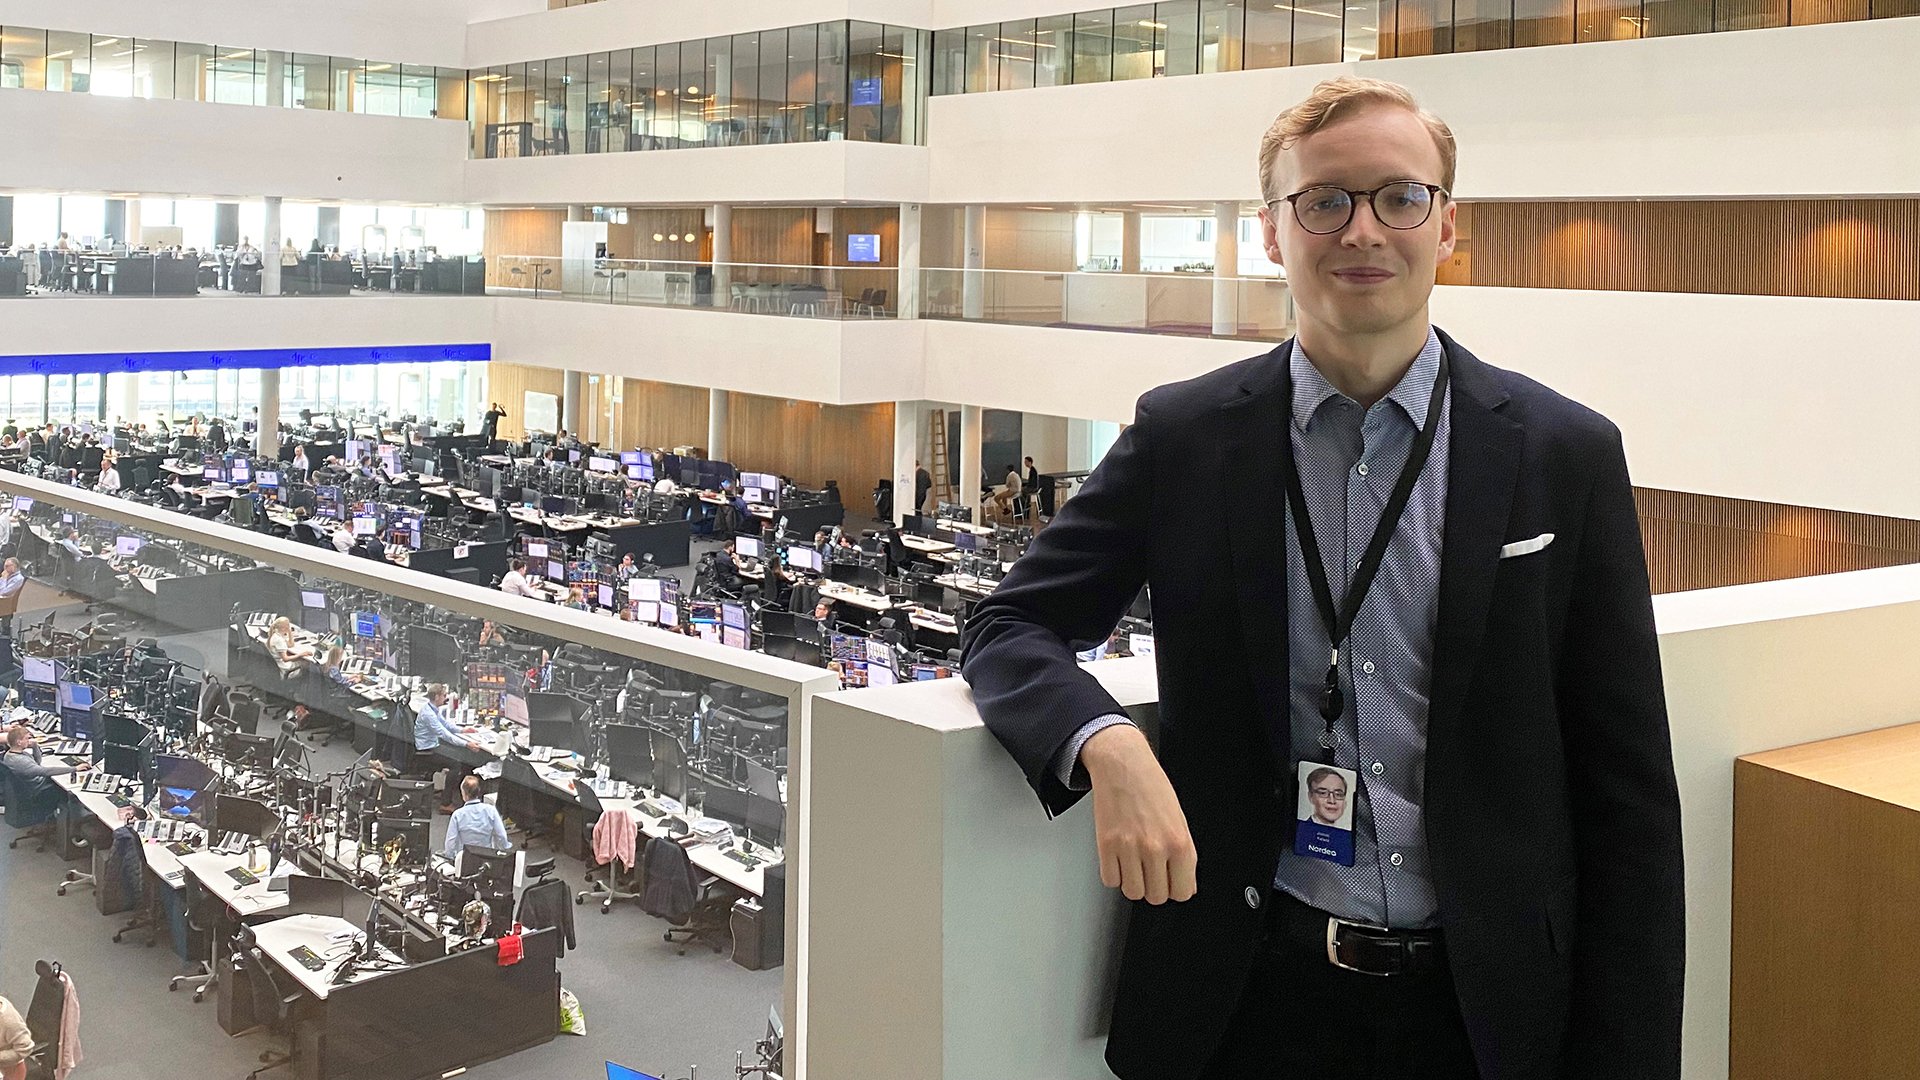 Joonas Karaila, Assistant Analyst, at Copenhagen office Trading floor